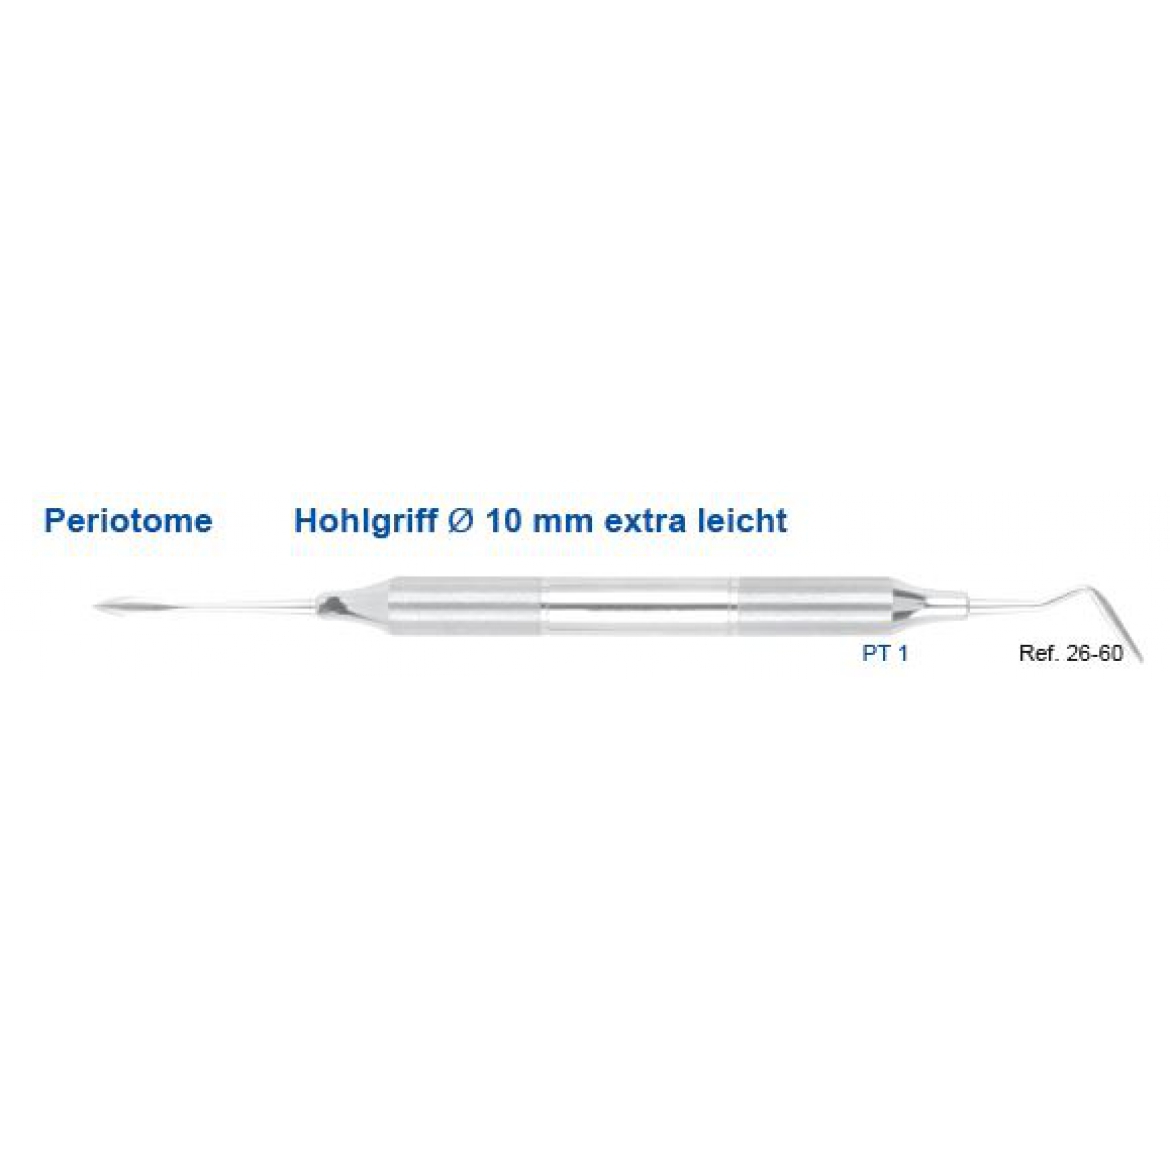 Периотом, форма PT01, ручка диаметр 10 мм